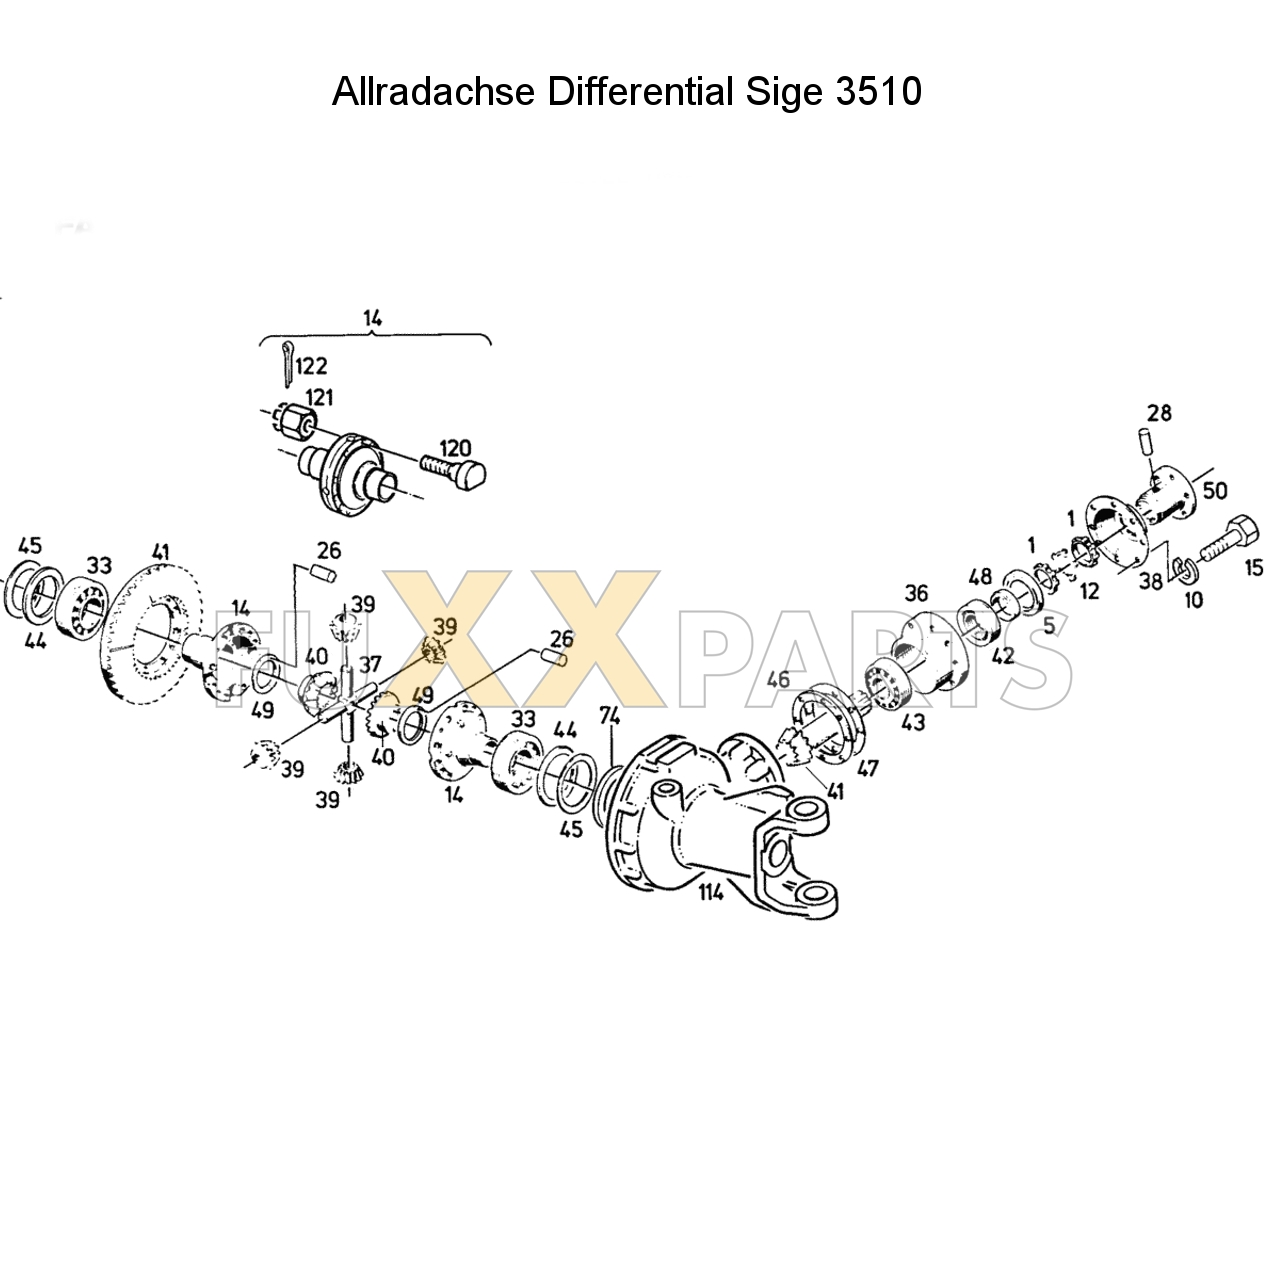 D 5207 C Allradachse Differential